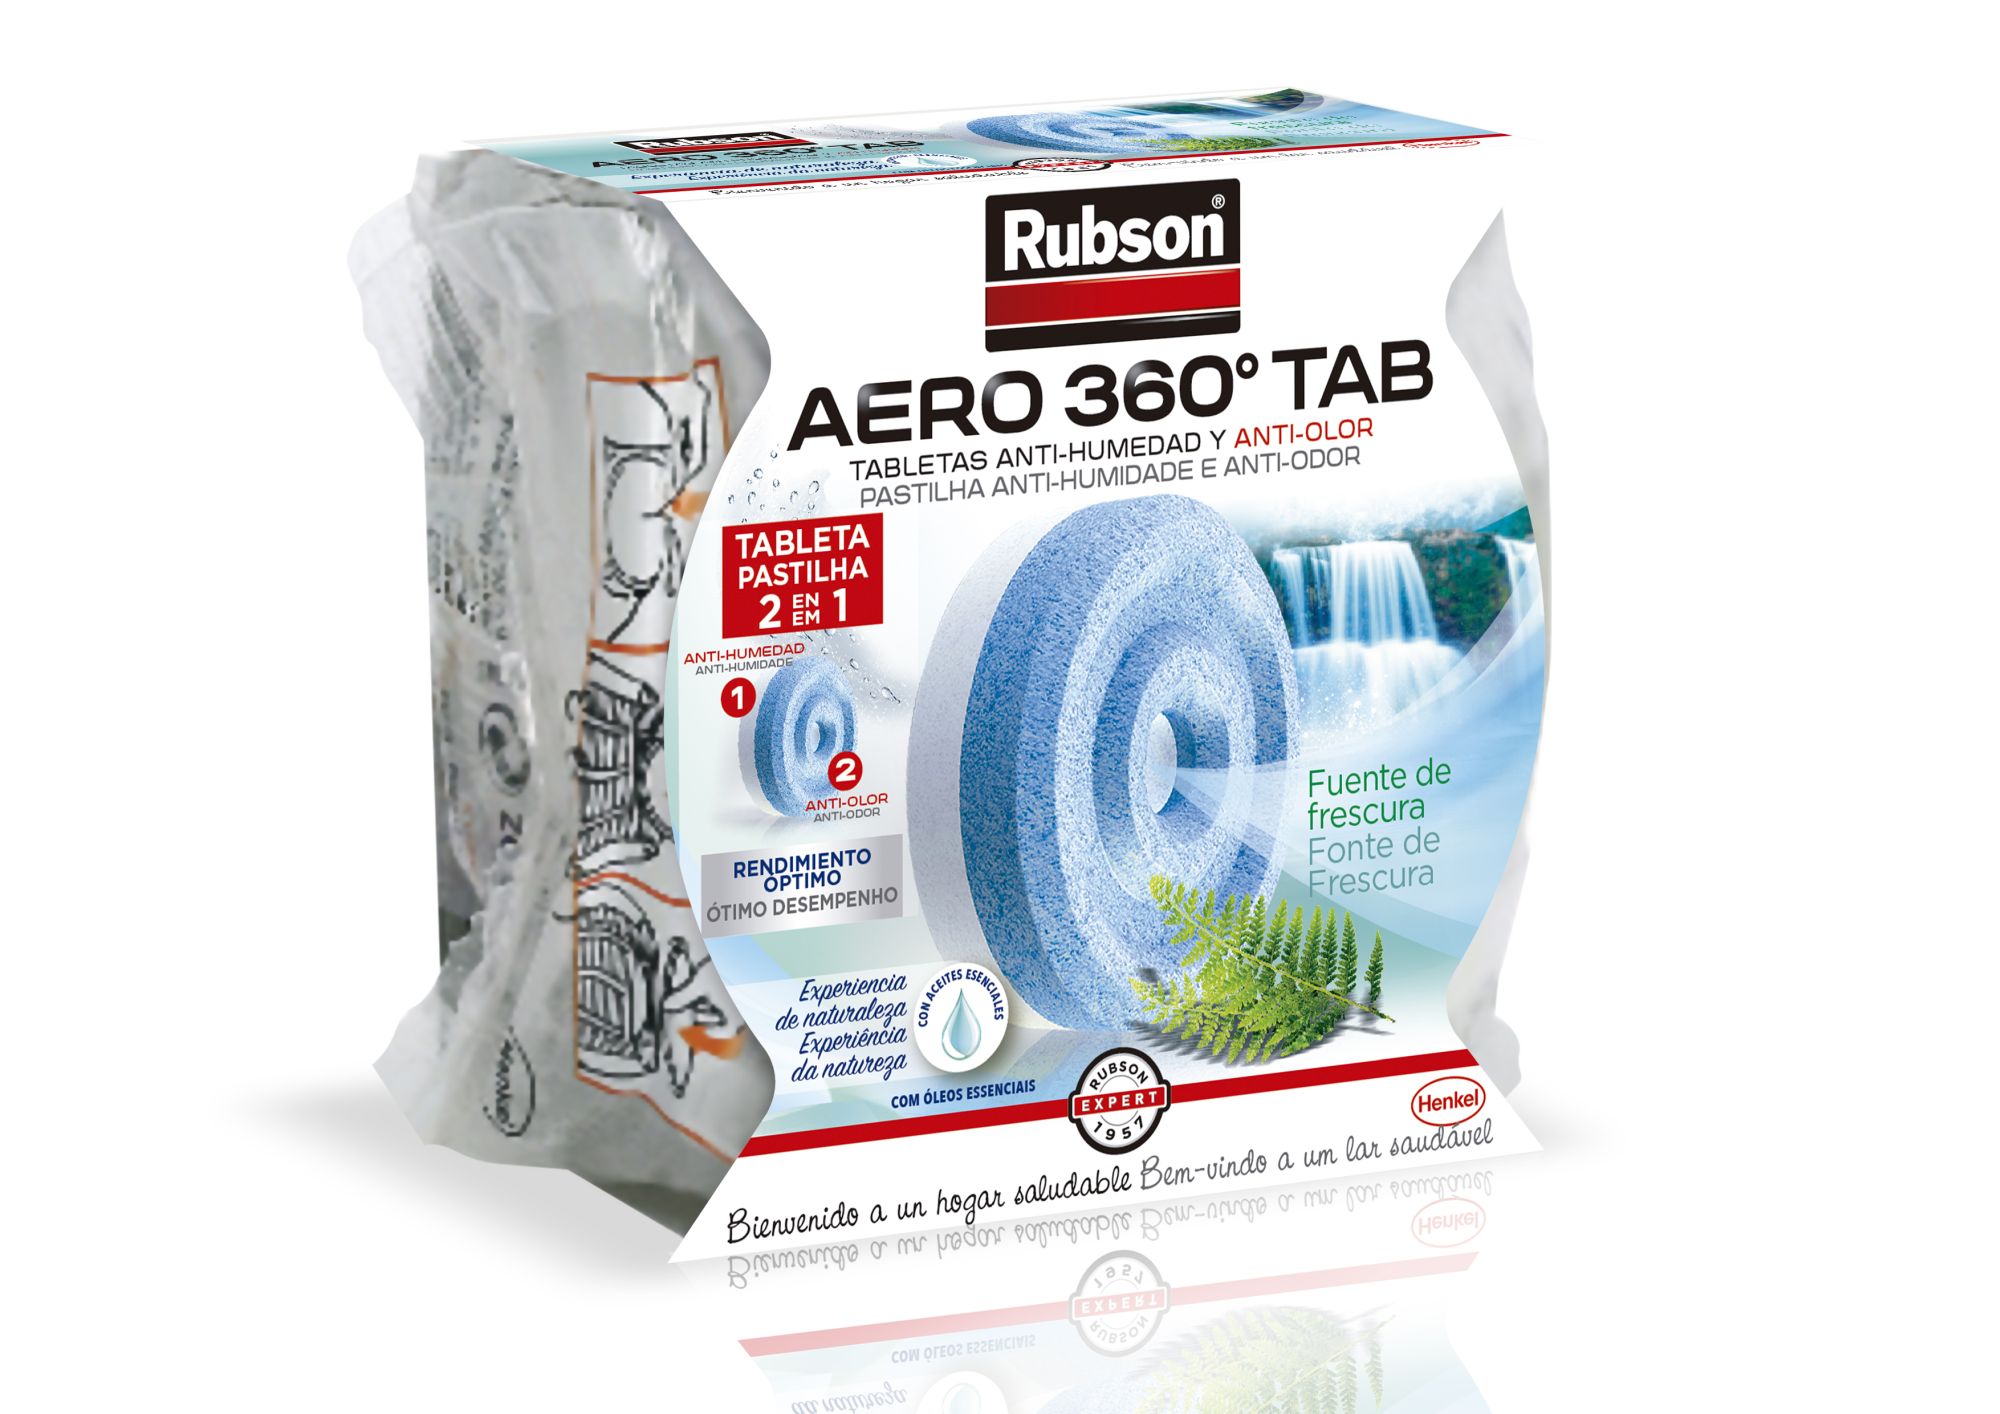 Rubson AERO 360º Deshumidificador recargable, absorbe humedad